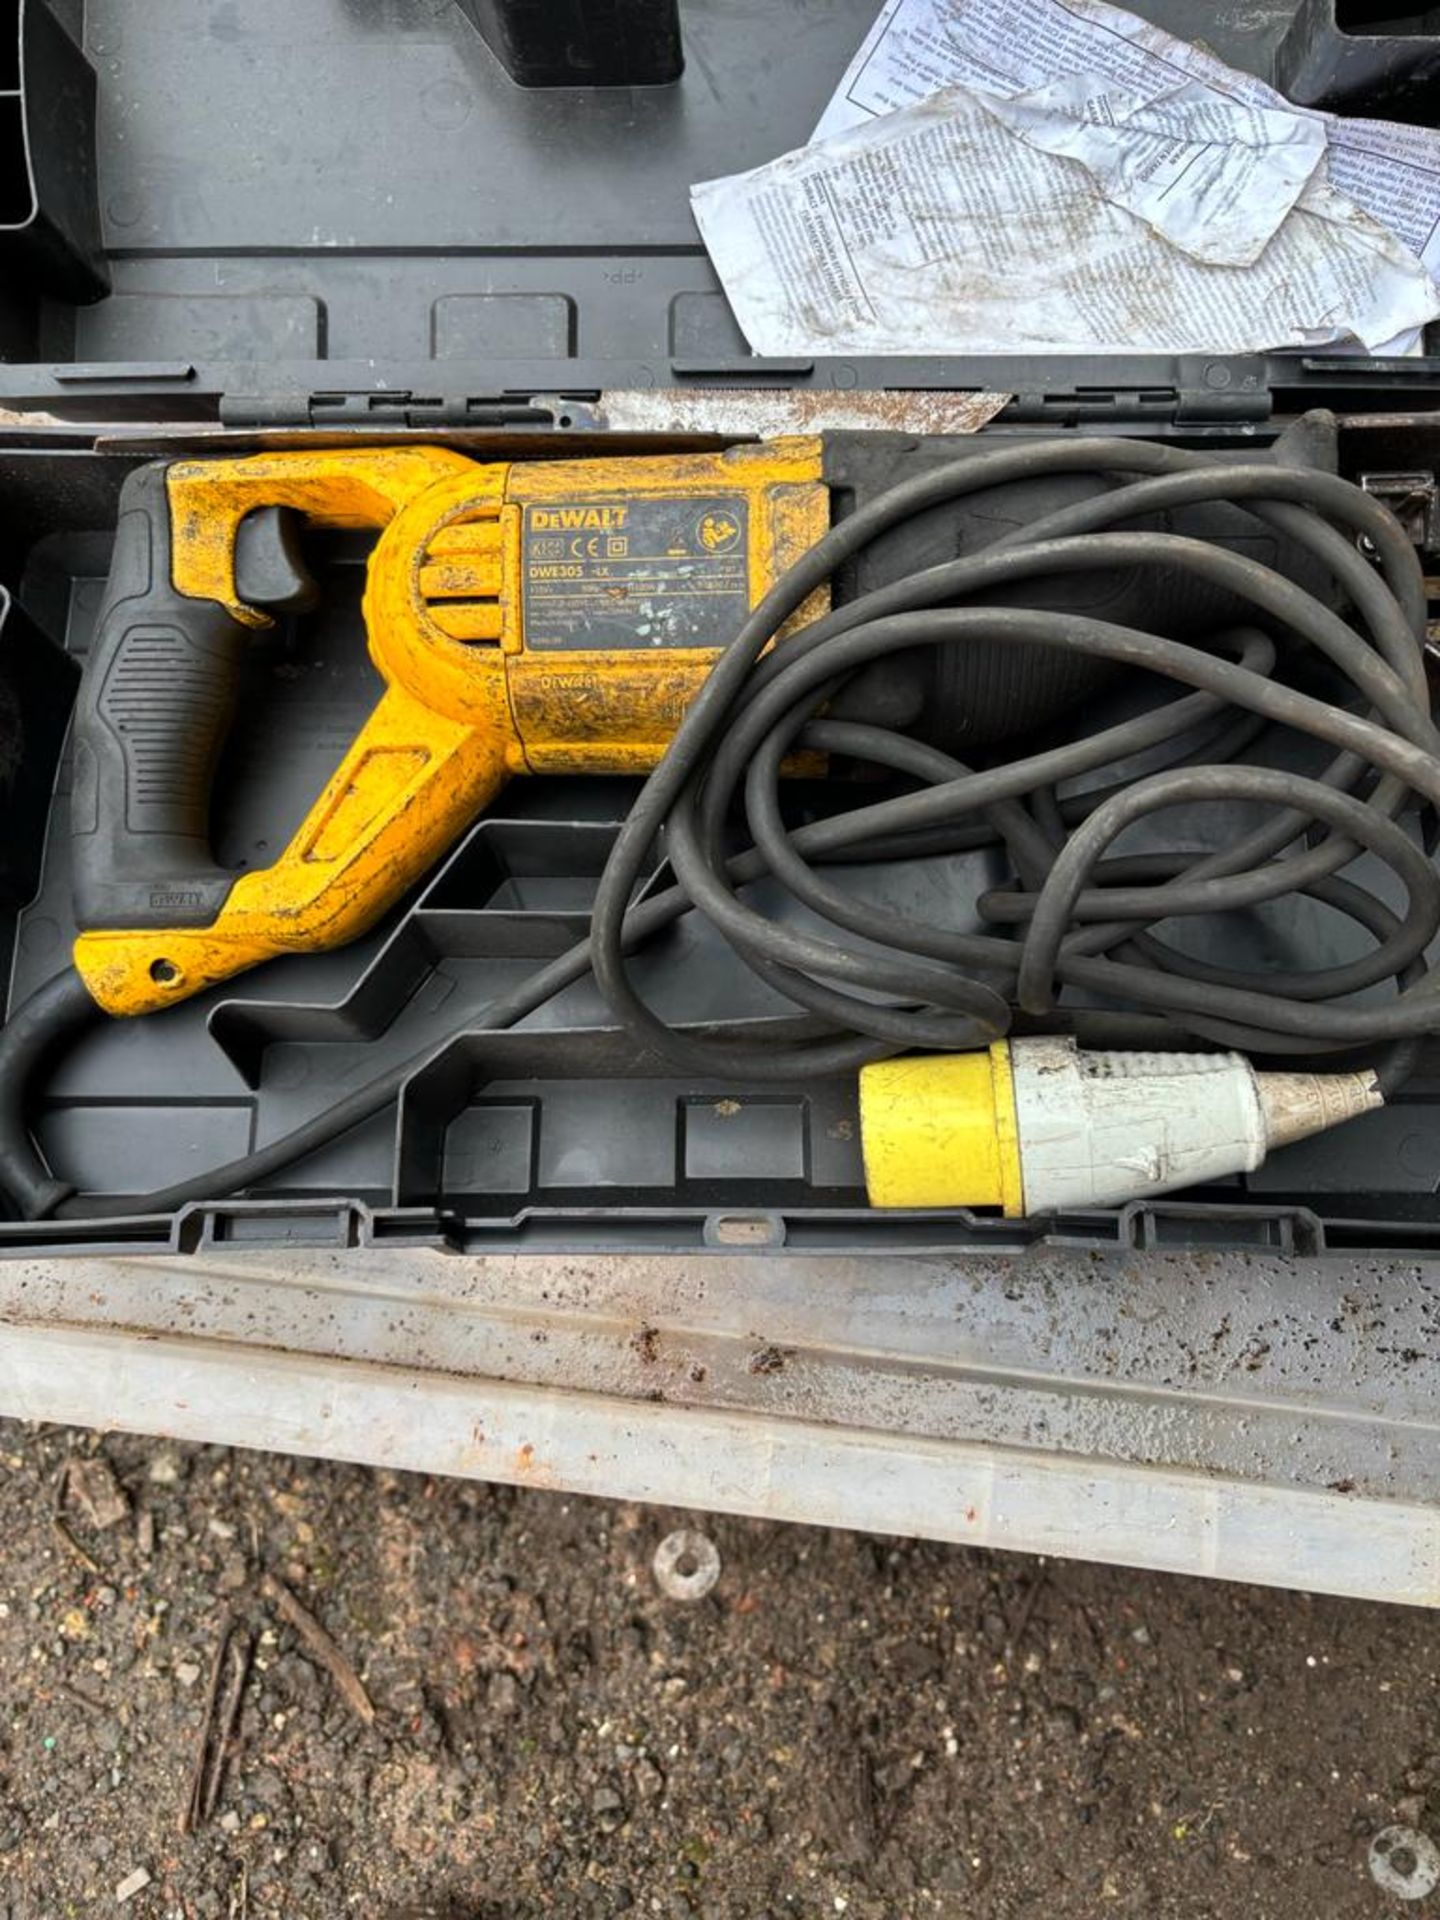 DeWalt DWE305 Portable Electric Reciprocating Saw, 110V Please read the following important